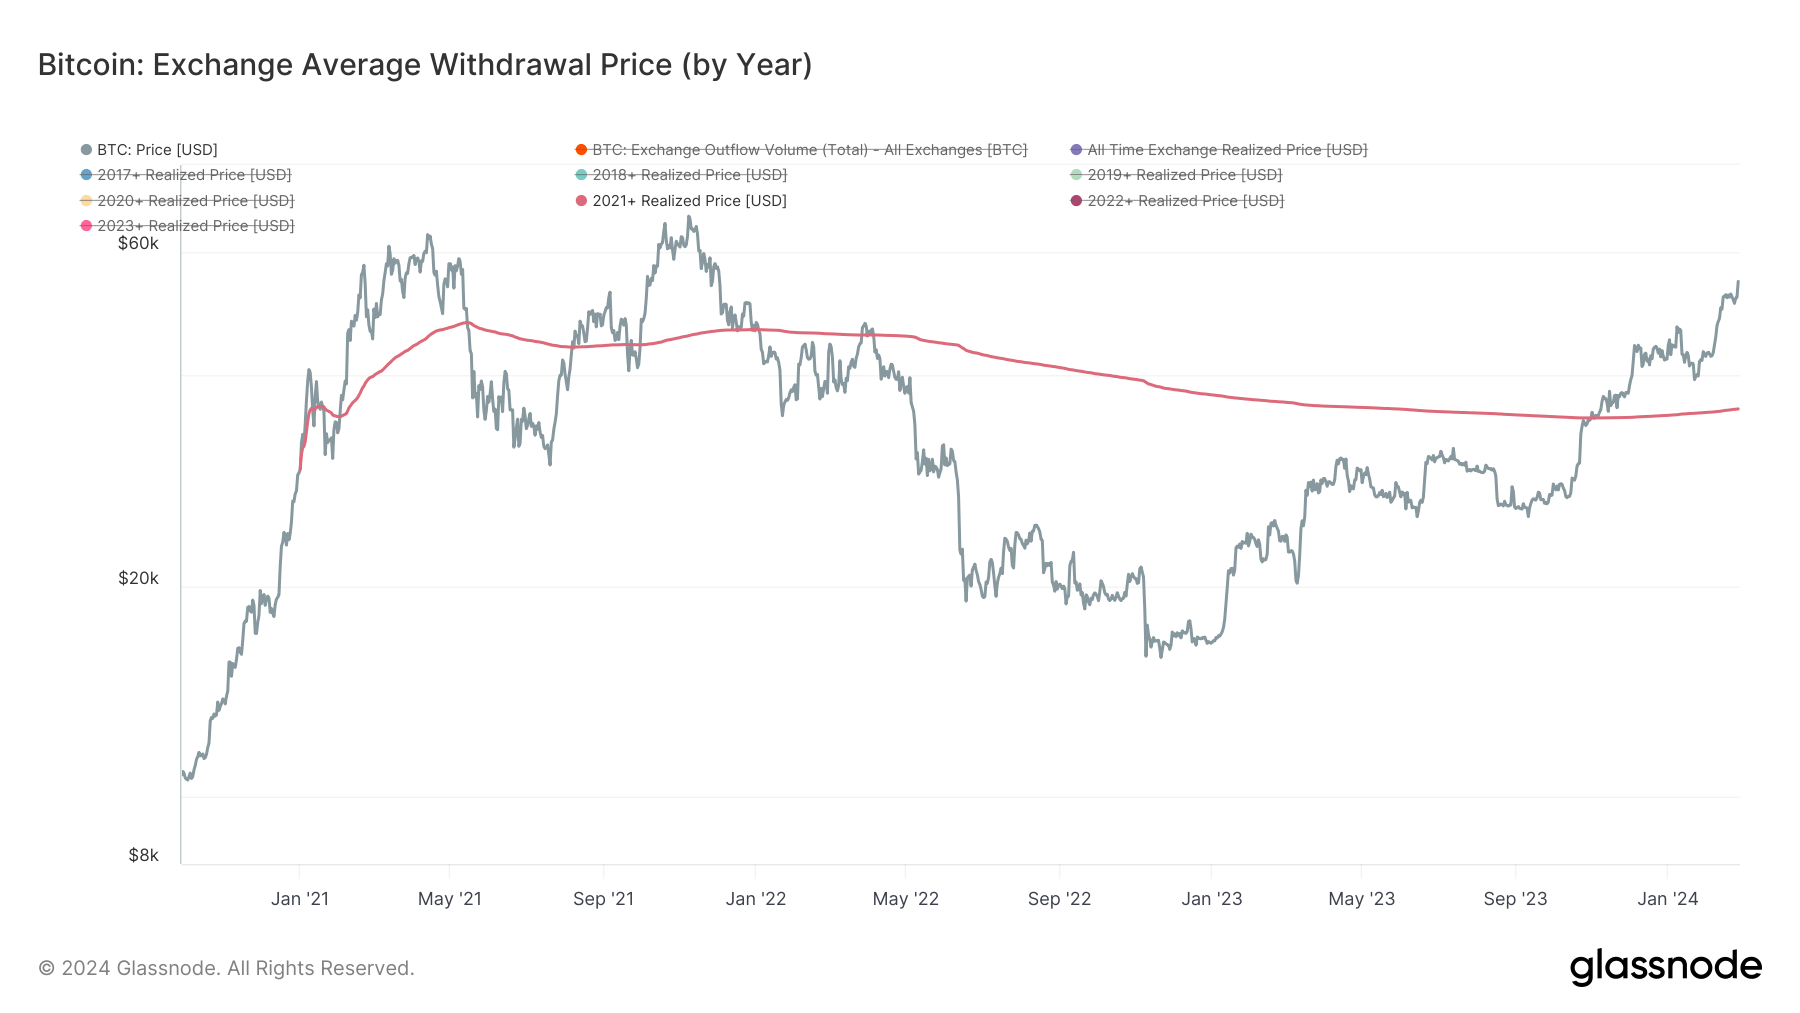 Exchange Average Withdrawal Price, 2021 cohort: (Source: Glassnode)